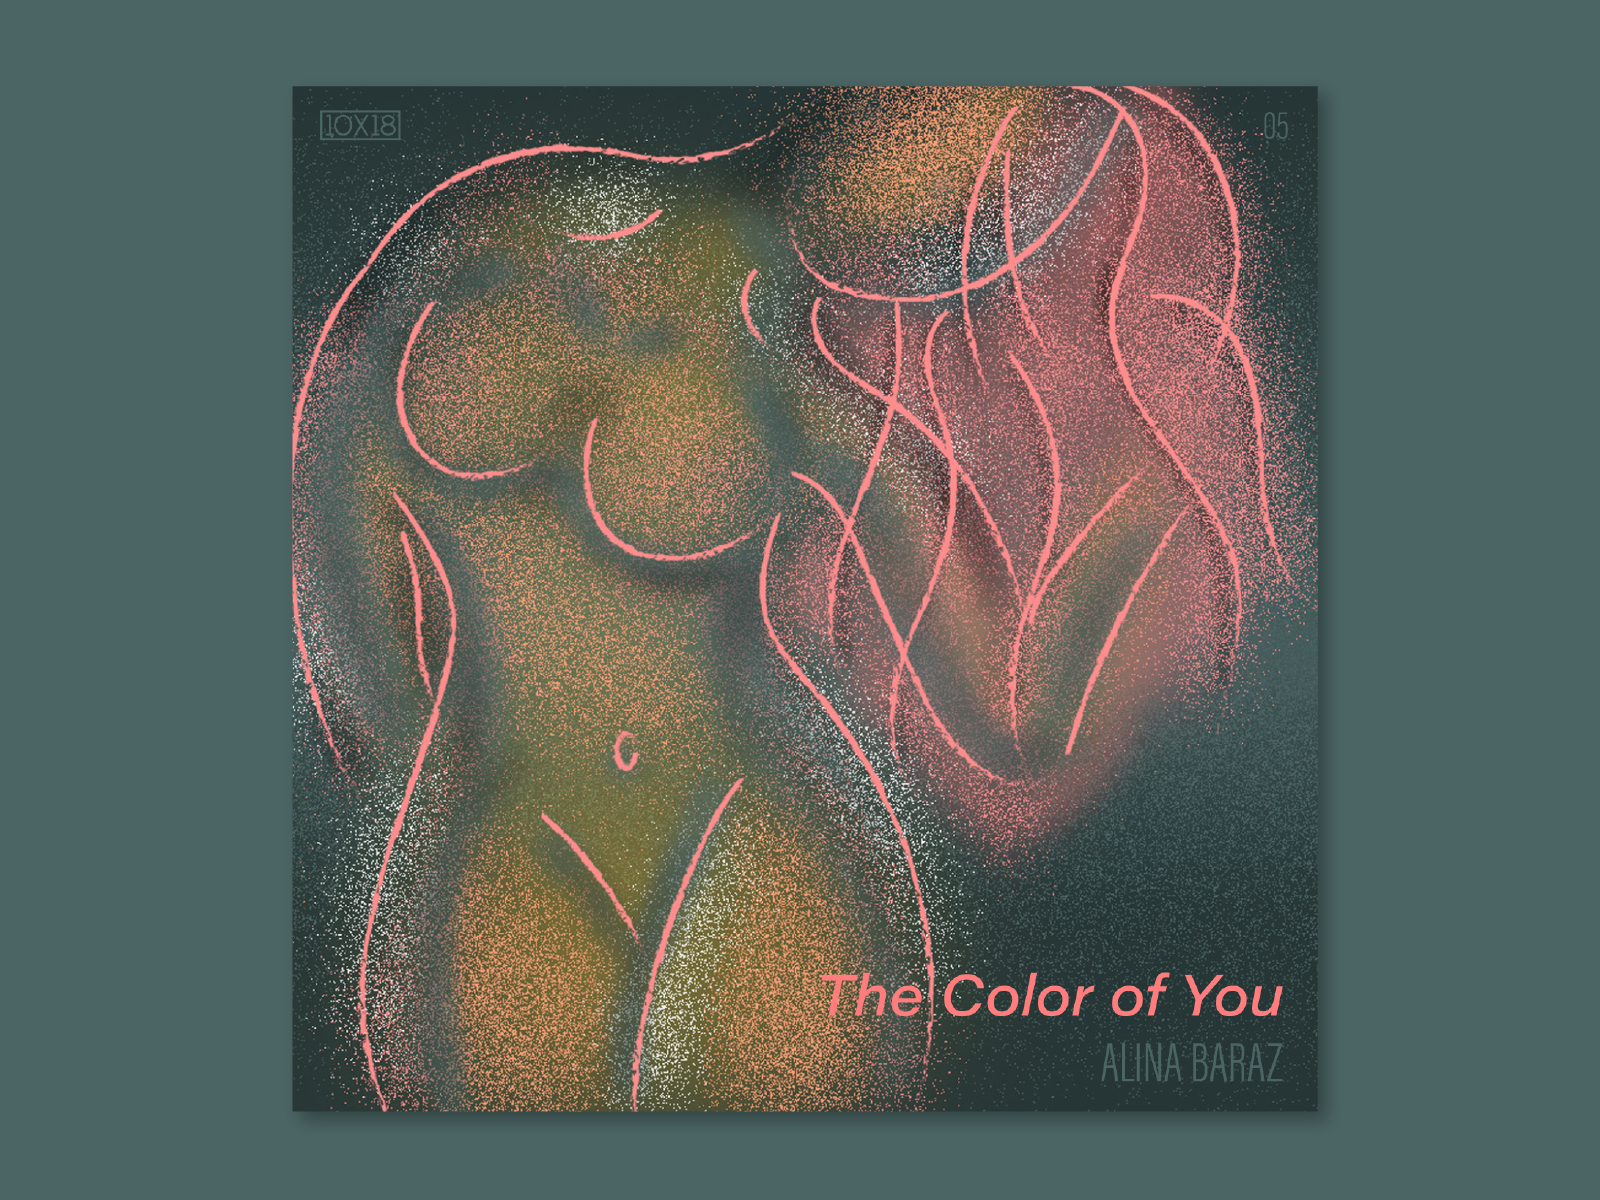 10X18 - 5. Alina Baraz, The Color of You 10x18 album art album cover alina baraz body character female illustration music sexy woman